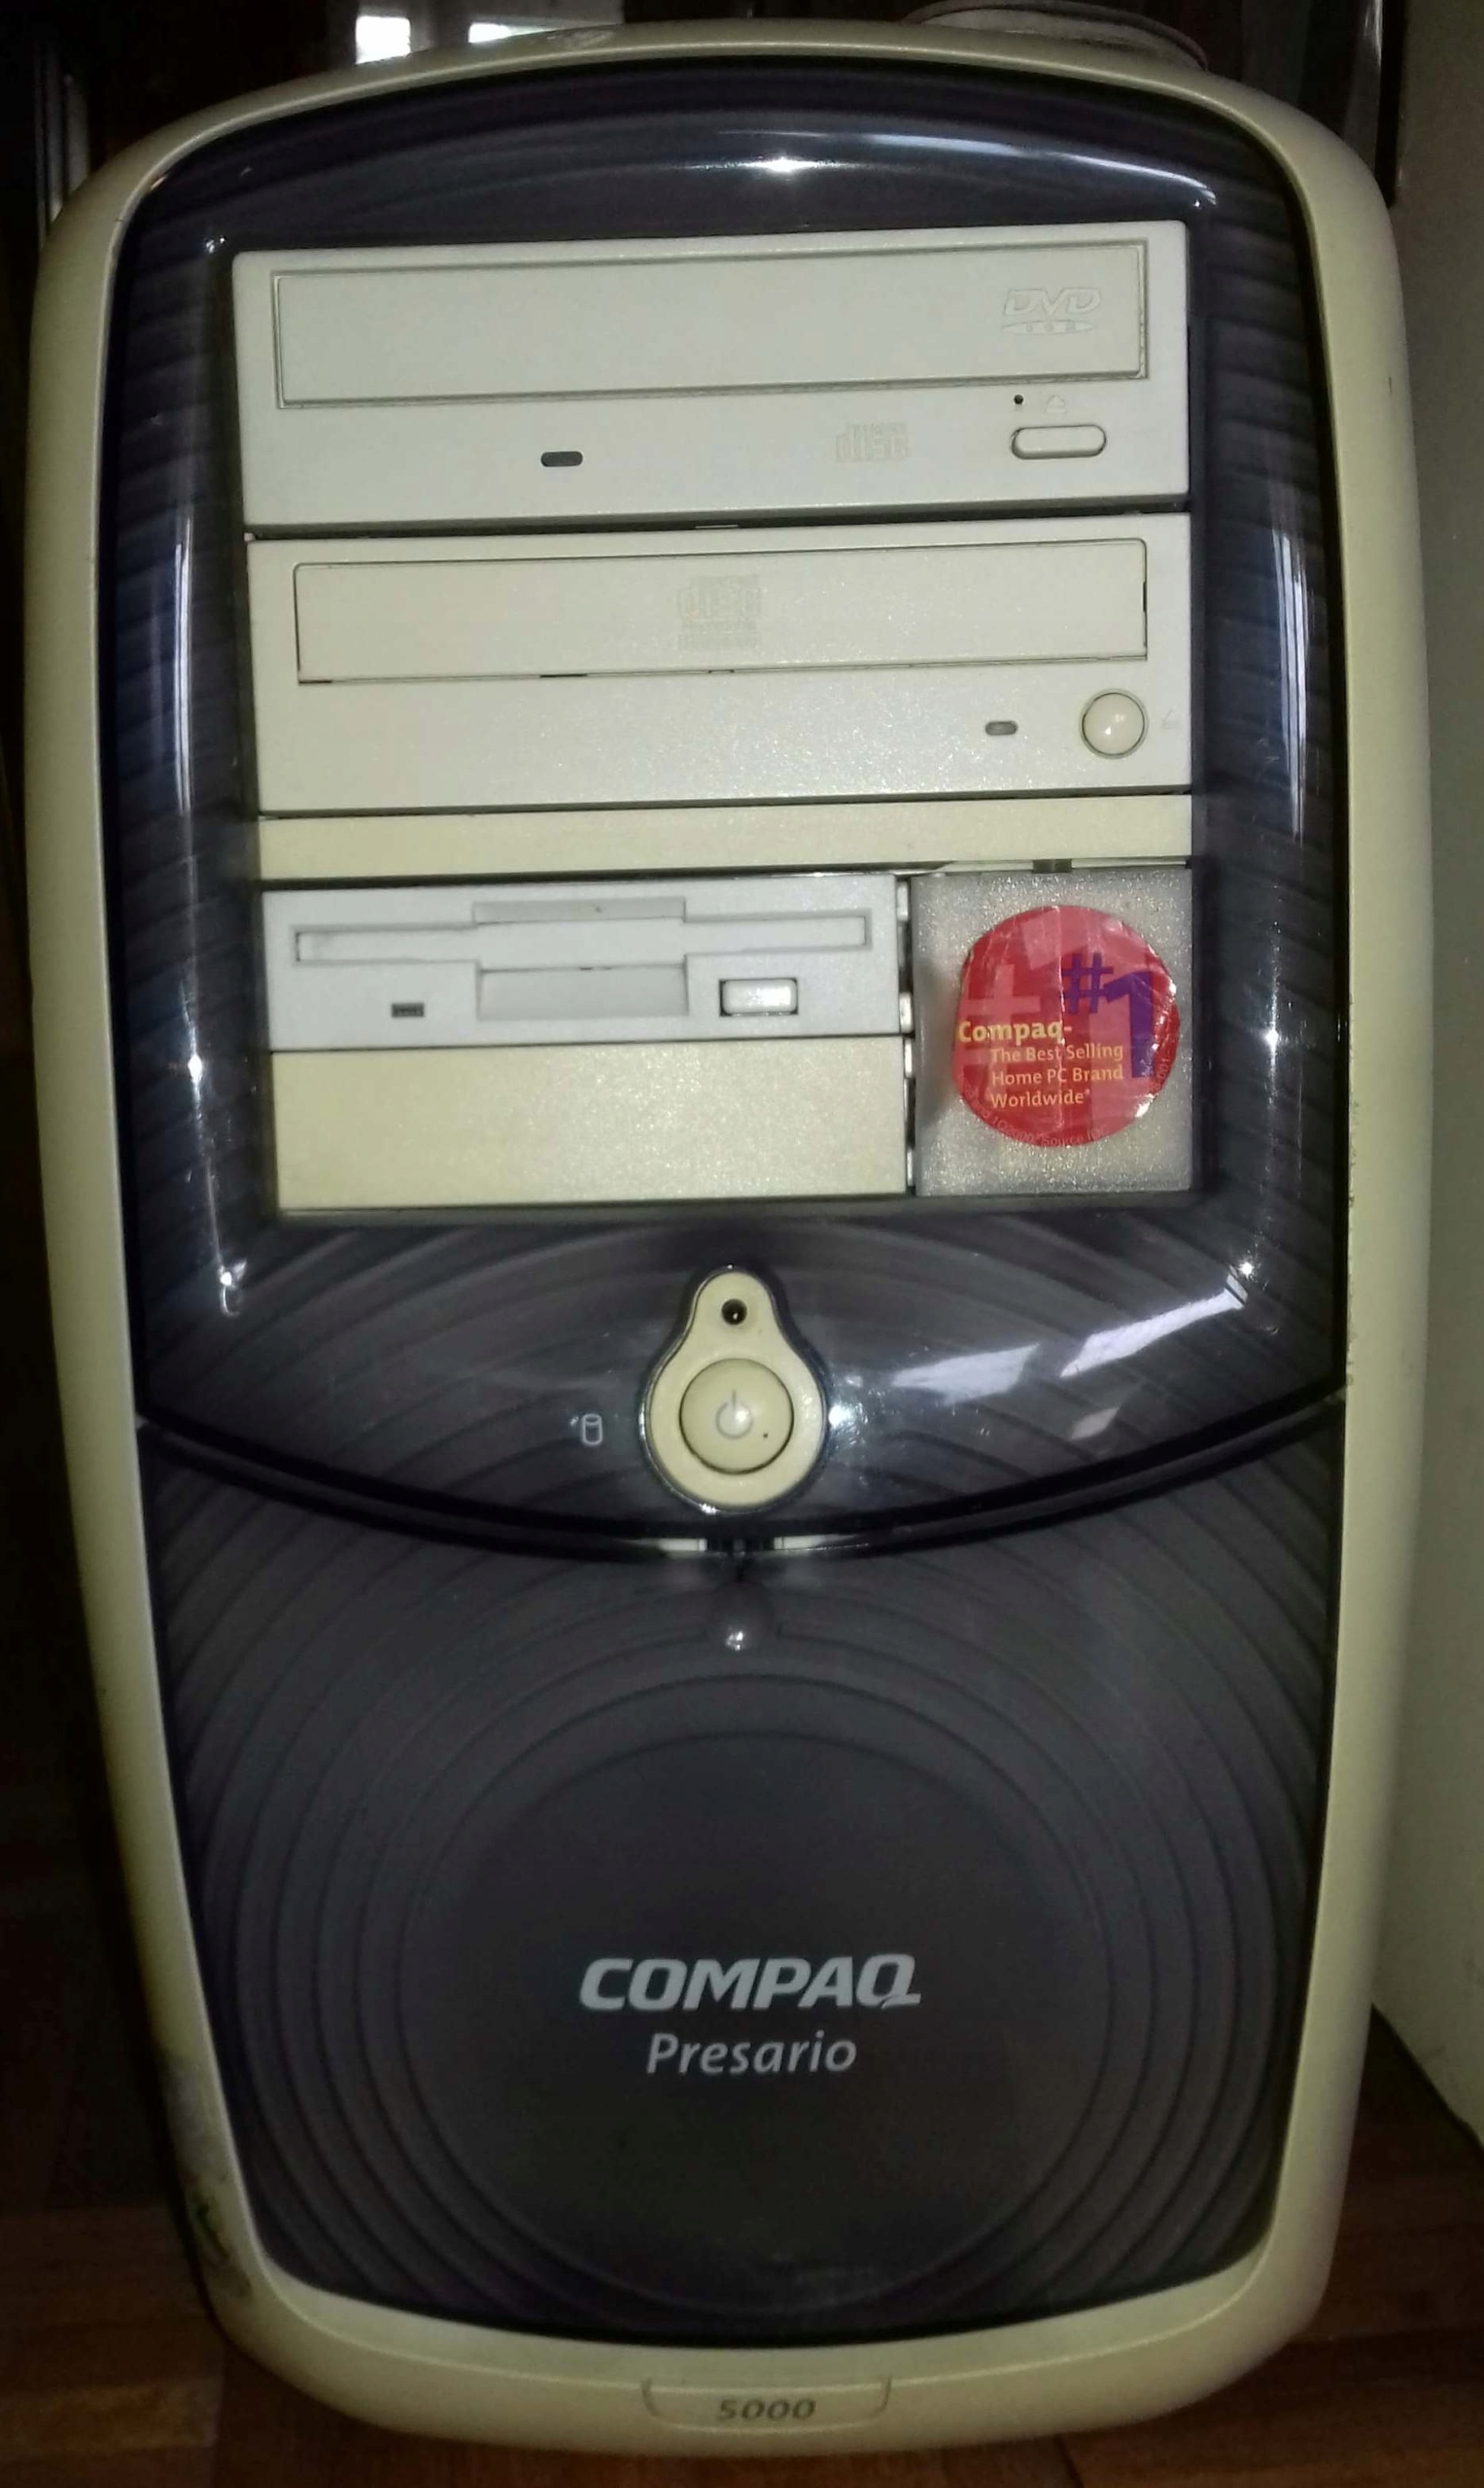 Compaq-Presario-5000-komputer-stacjonarny_002.jpg